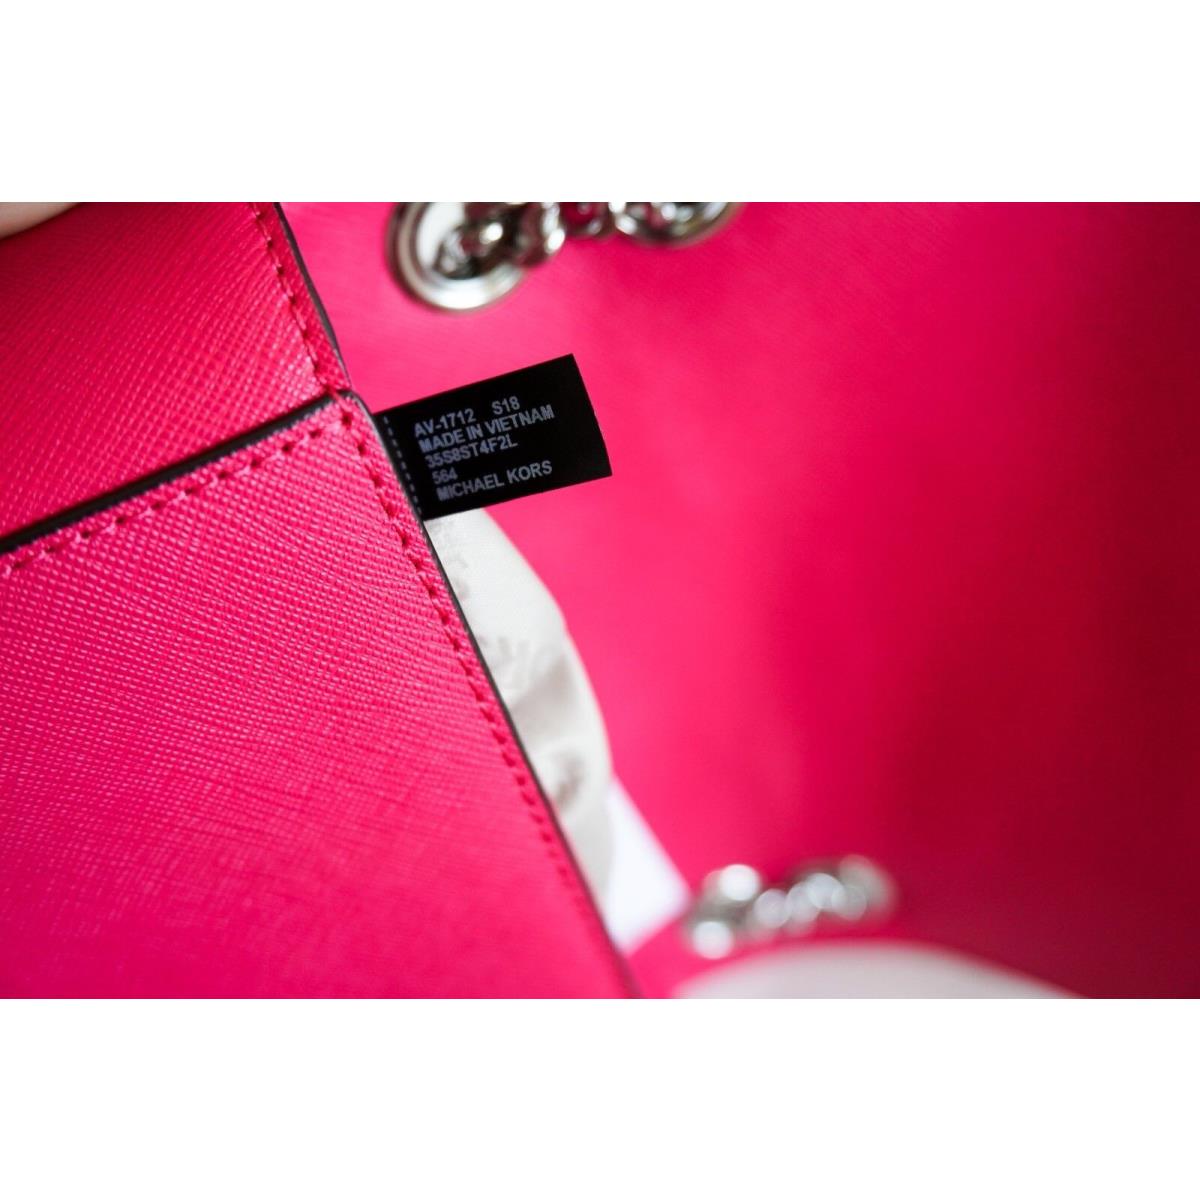 Michael Kors  bag  TINA - Pink Exterior, Beige Lining, Pink Handle/Strap 7